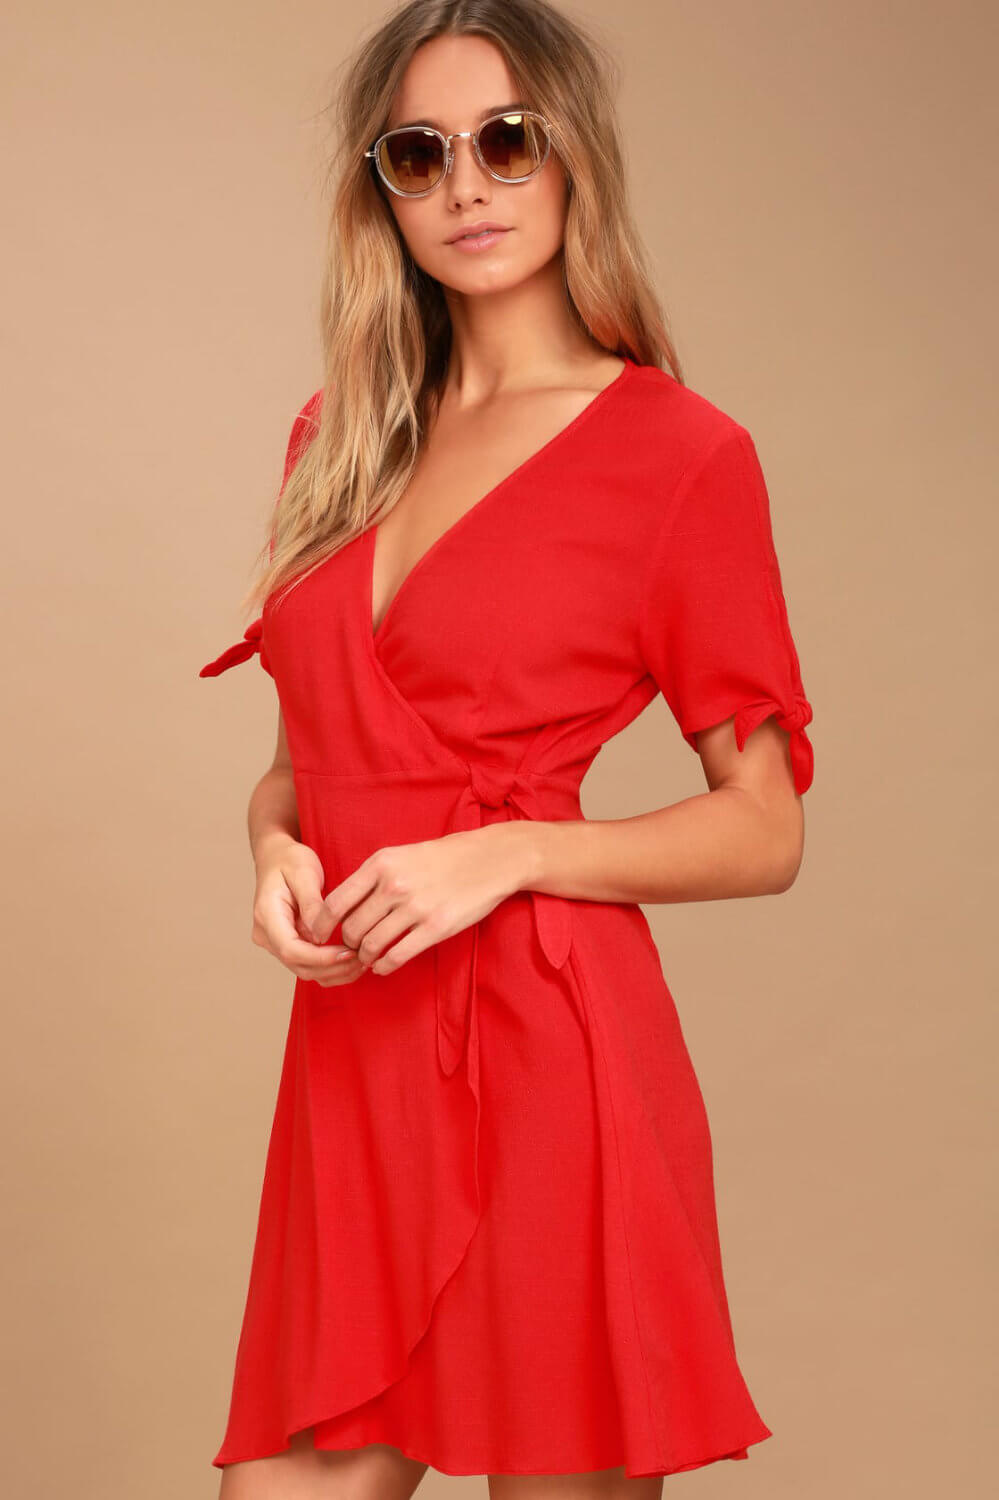 Beach Honeymoon Dresses Cute Beach Outfits Red Wrap Dress